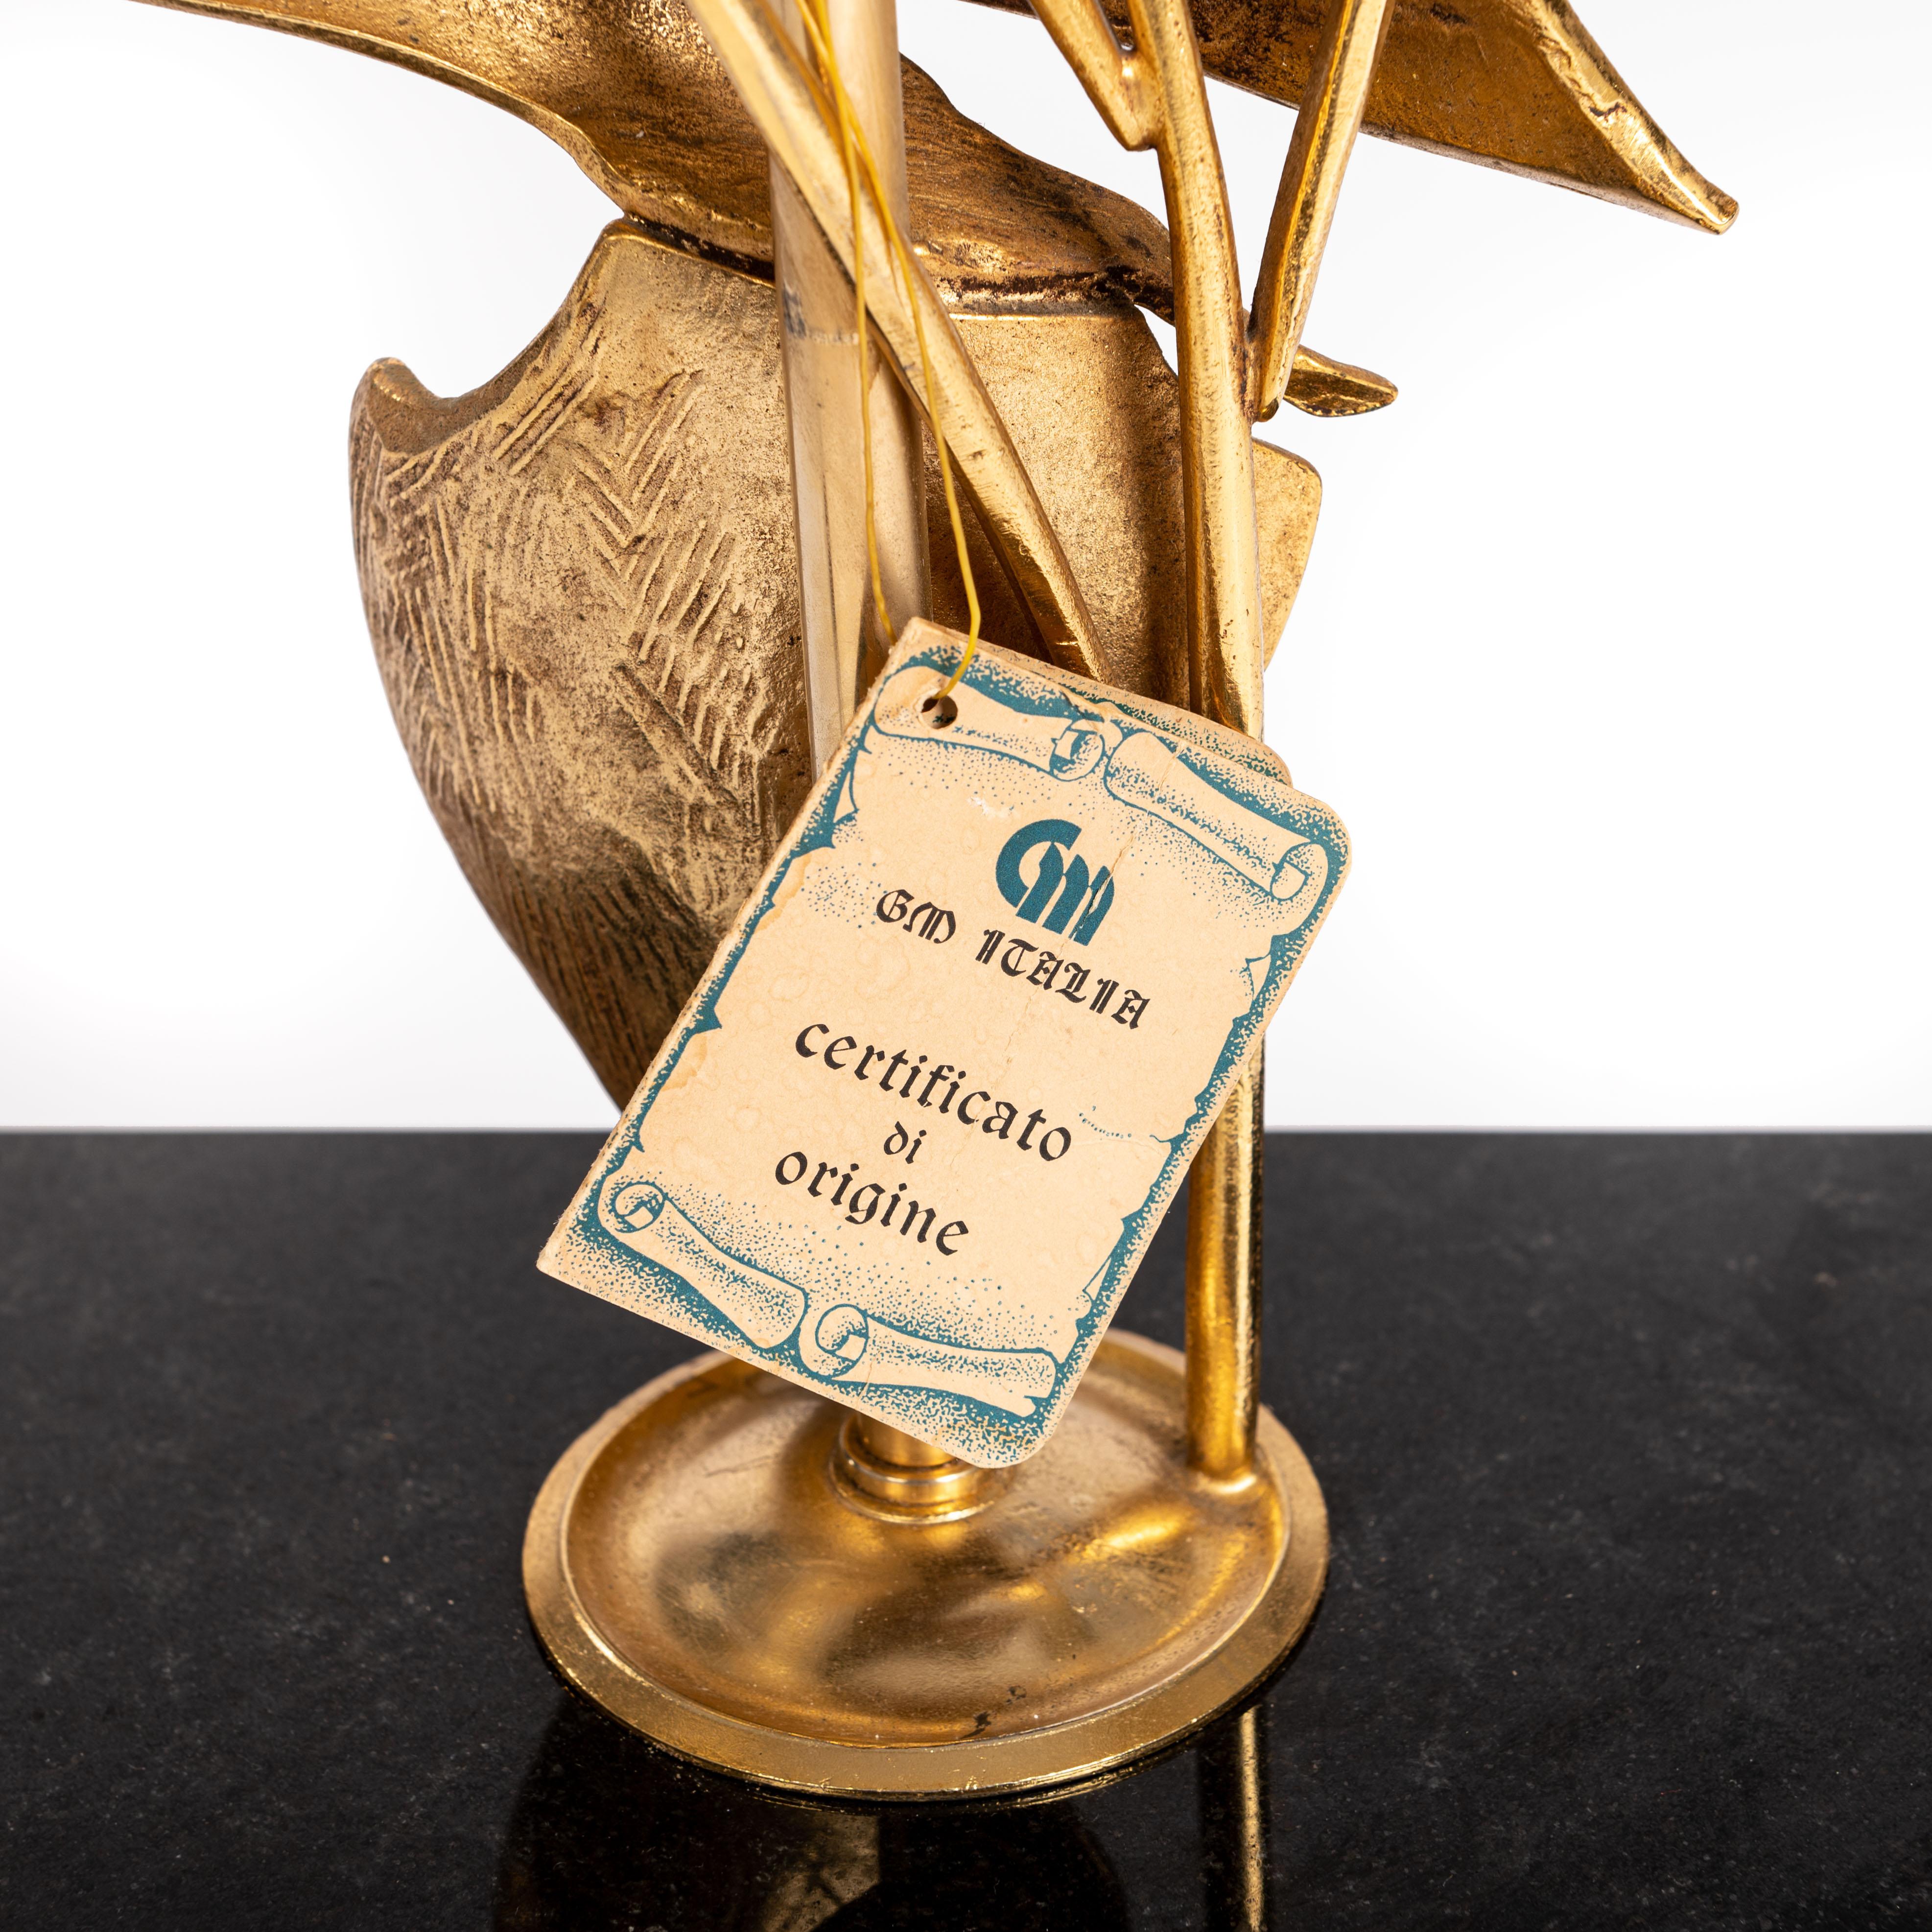 Italian Midcentury Gilded Brass Bird Table Lamp by GM Italia 1950s For Sale 4